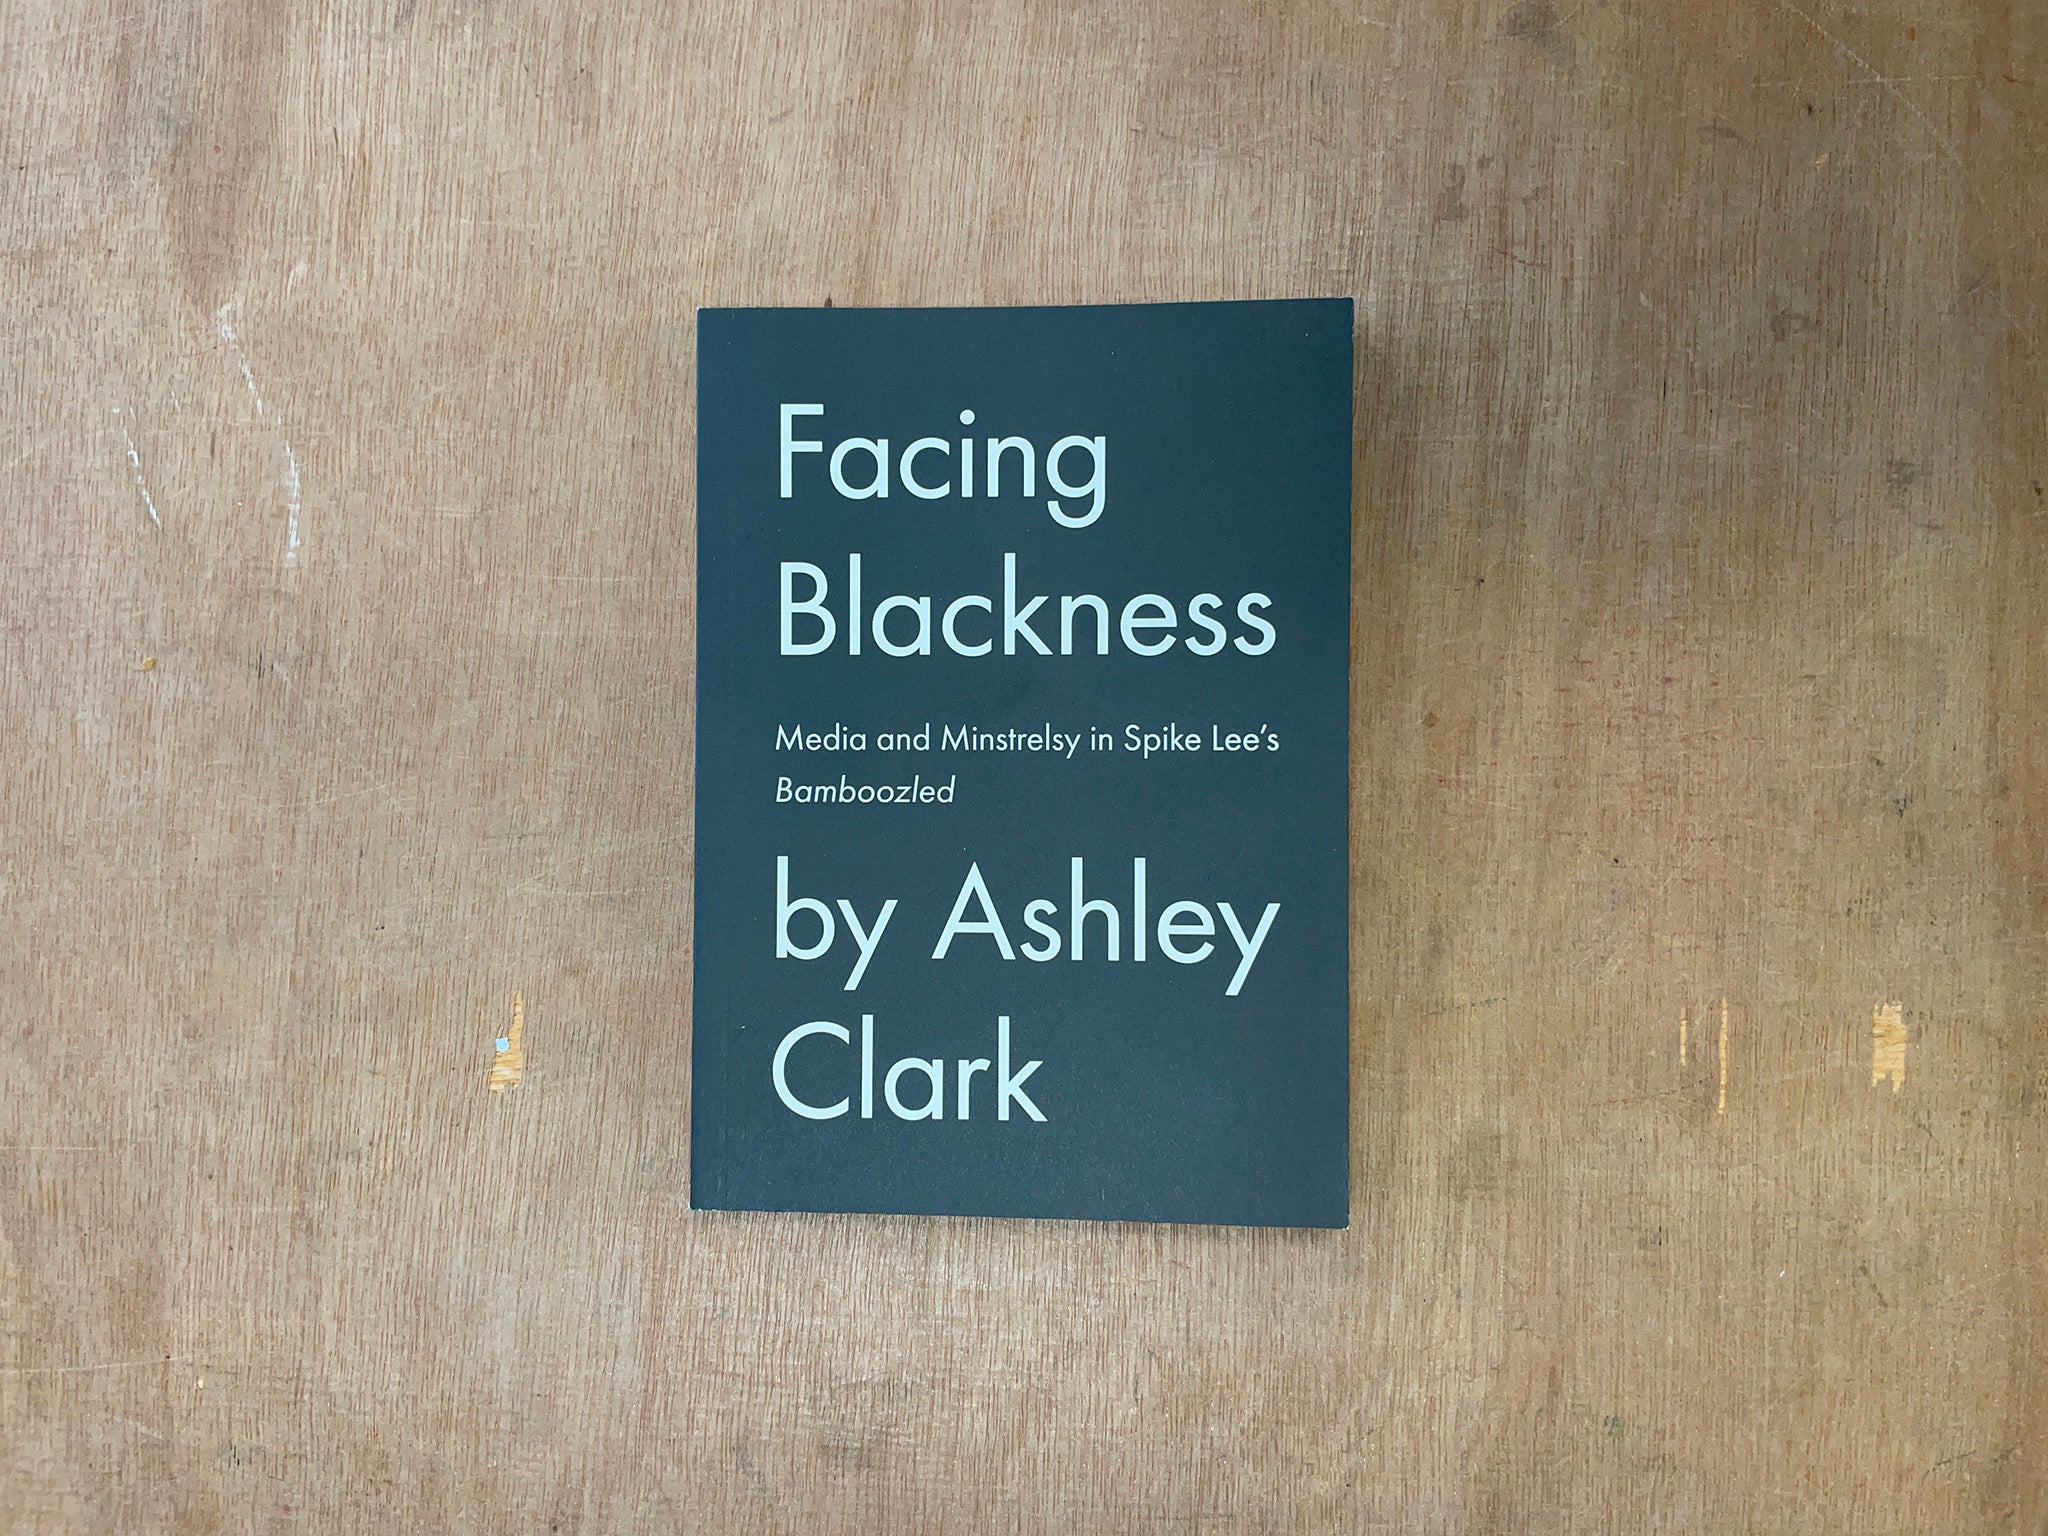 FACING BLACKNESS by Ashley Clark